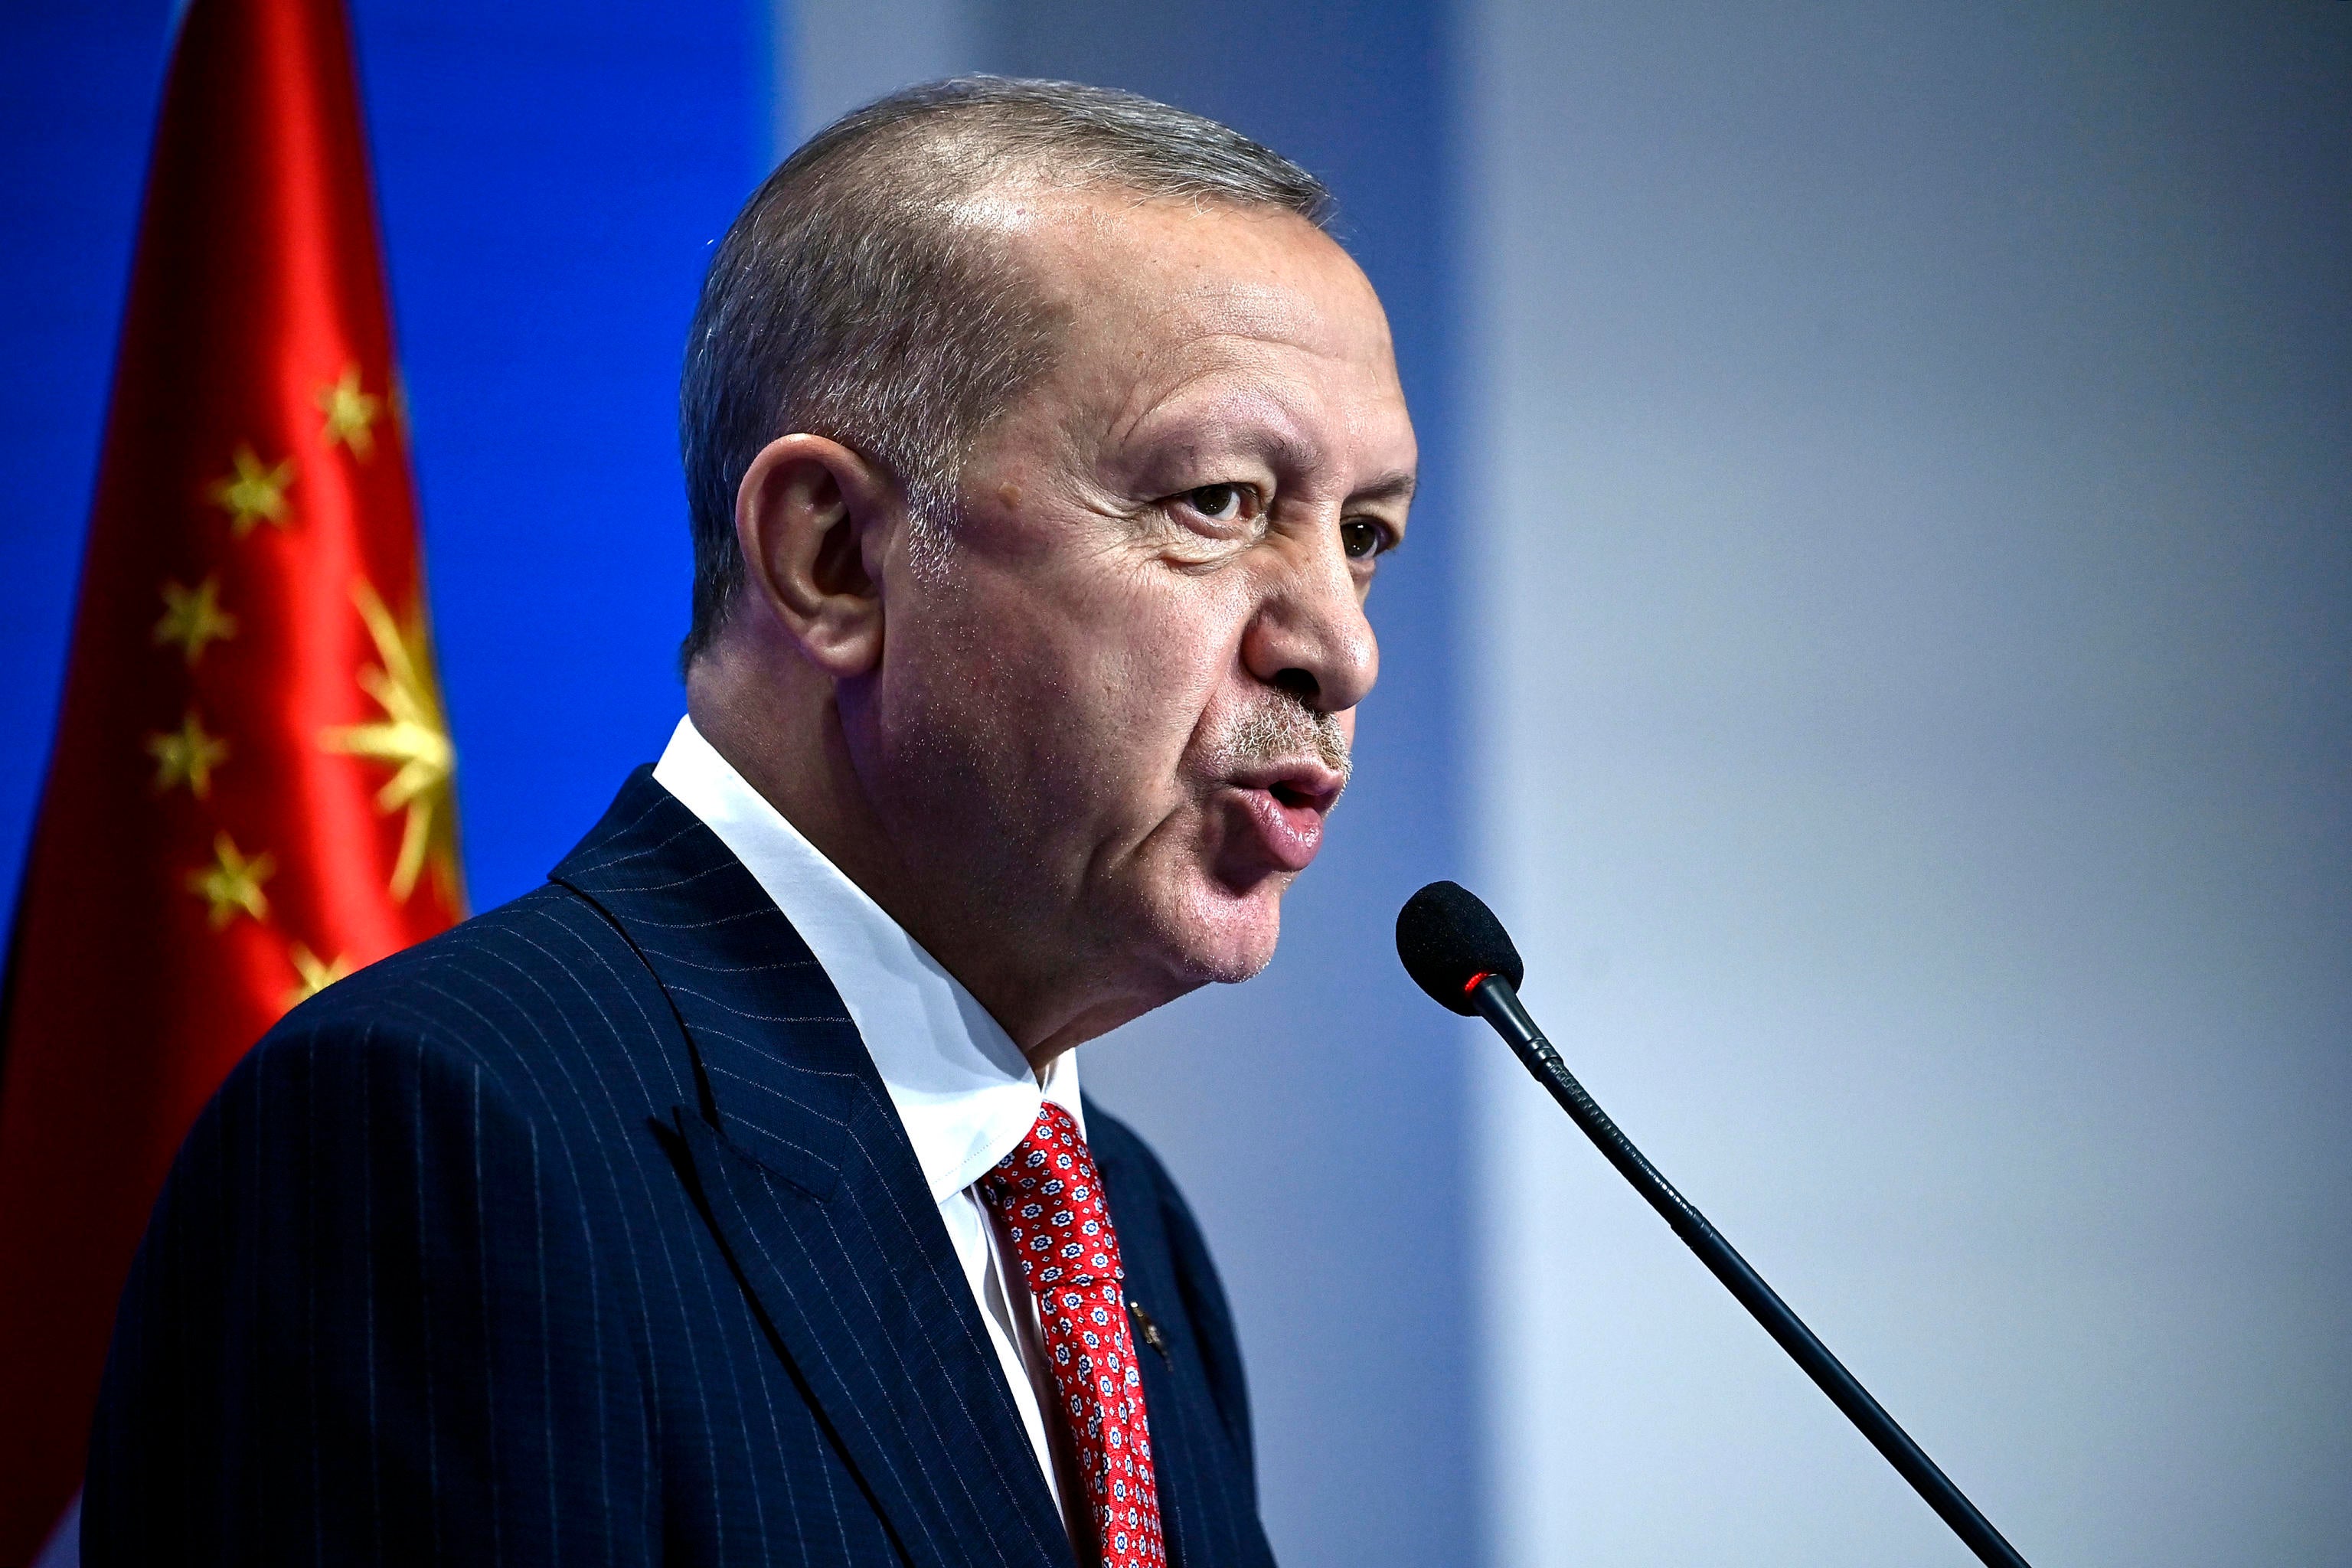 Mr Erdogan’s popularity is sliding amid Turkey’s economic freefall